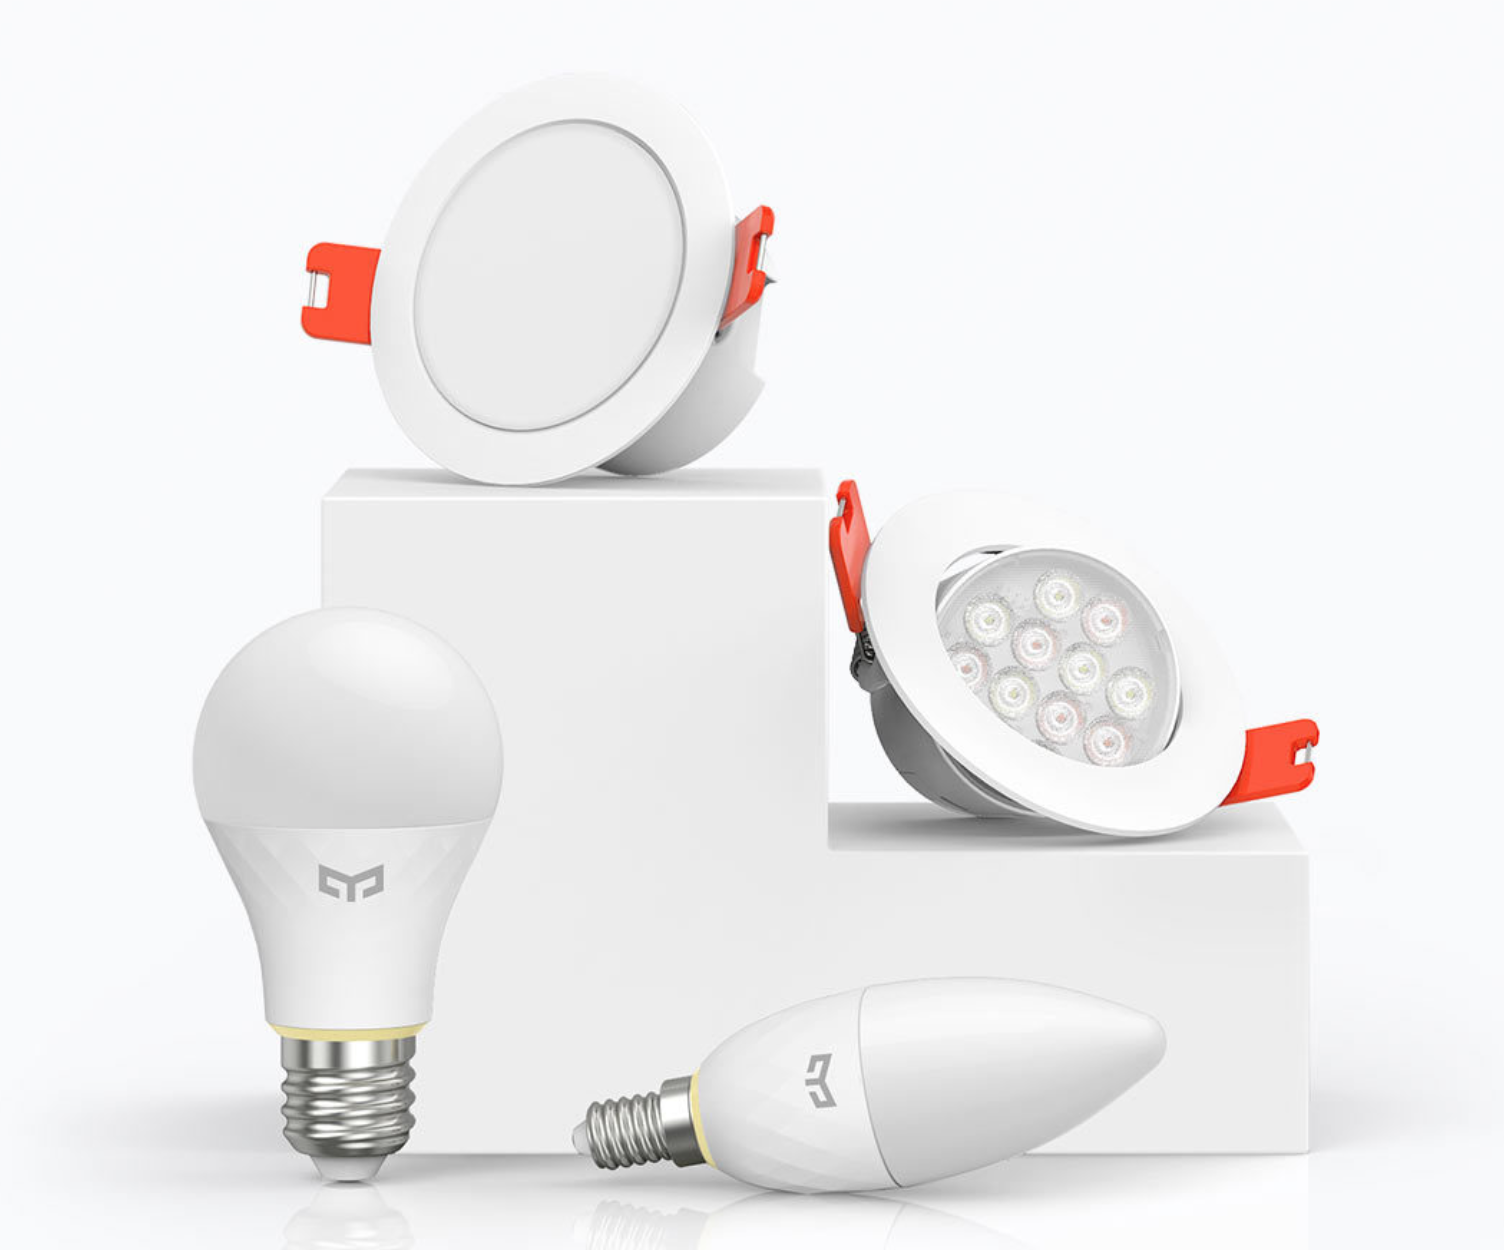 Yeelight Mesh a new set of bulbs on the Xiaomi offer